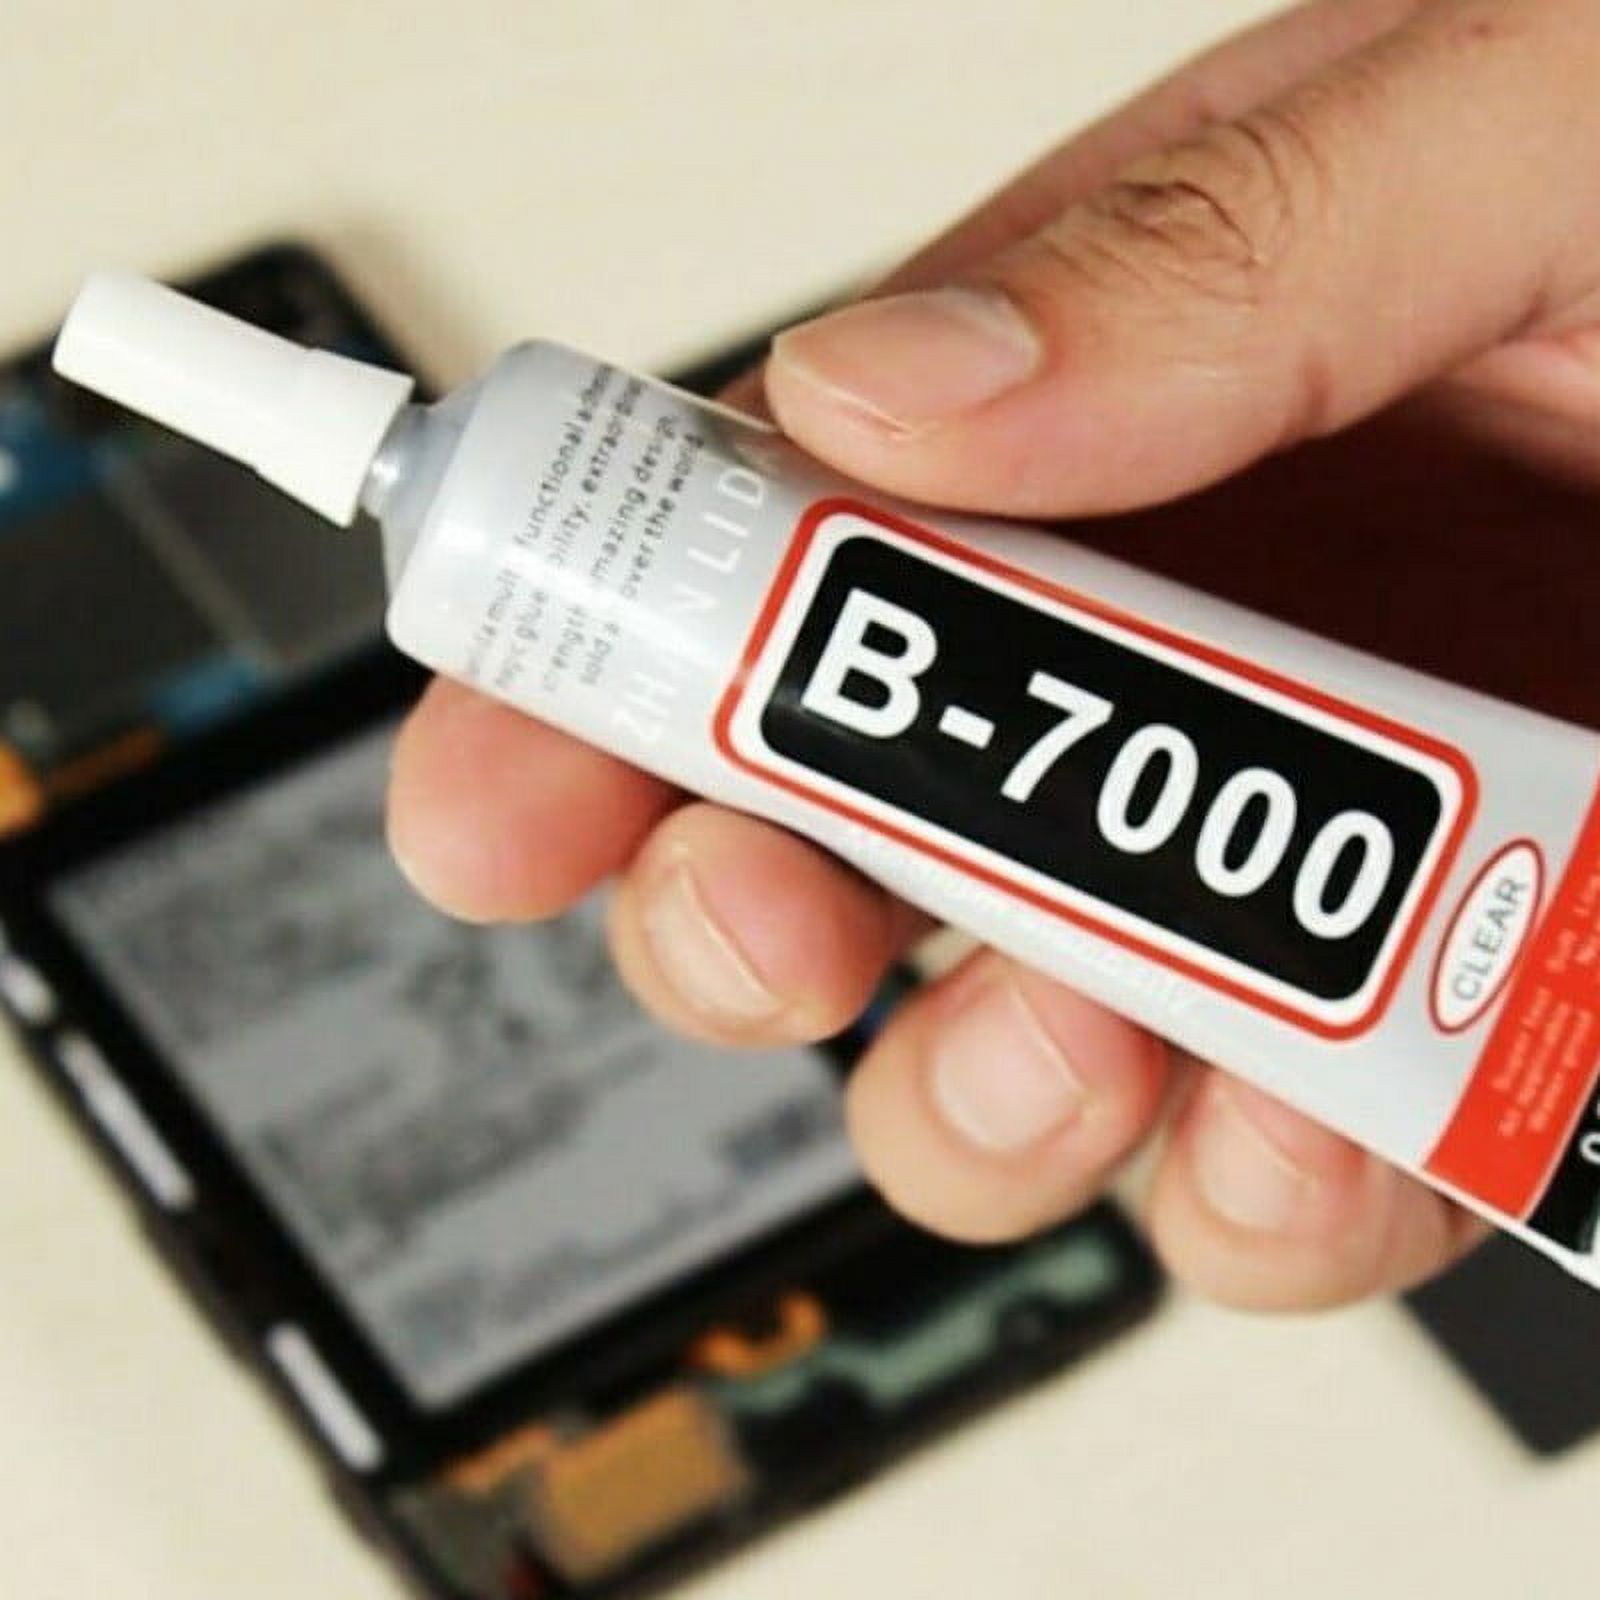 B7000 Glue Industrial Adhesive w/ Needle For Phone Frame Screen Repair  50/110ml